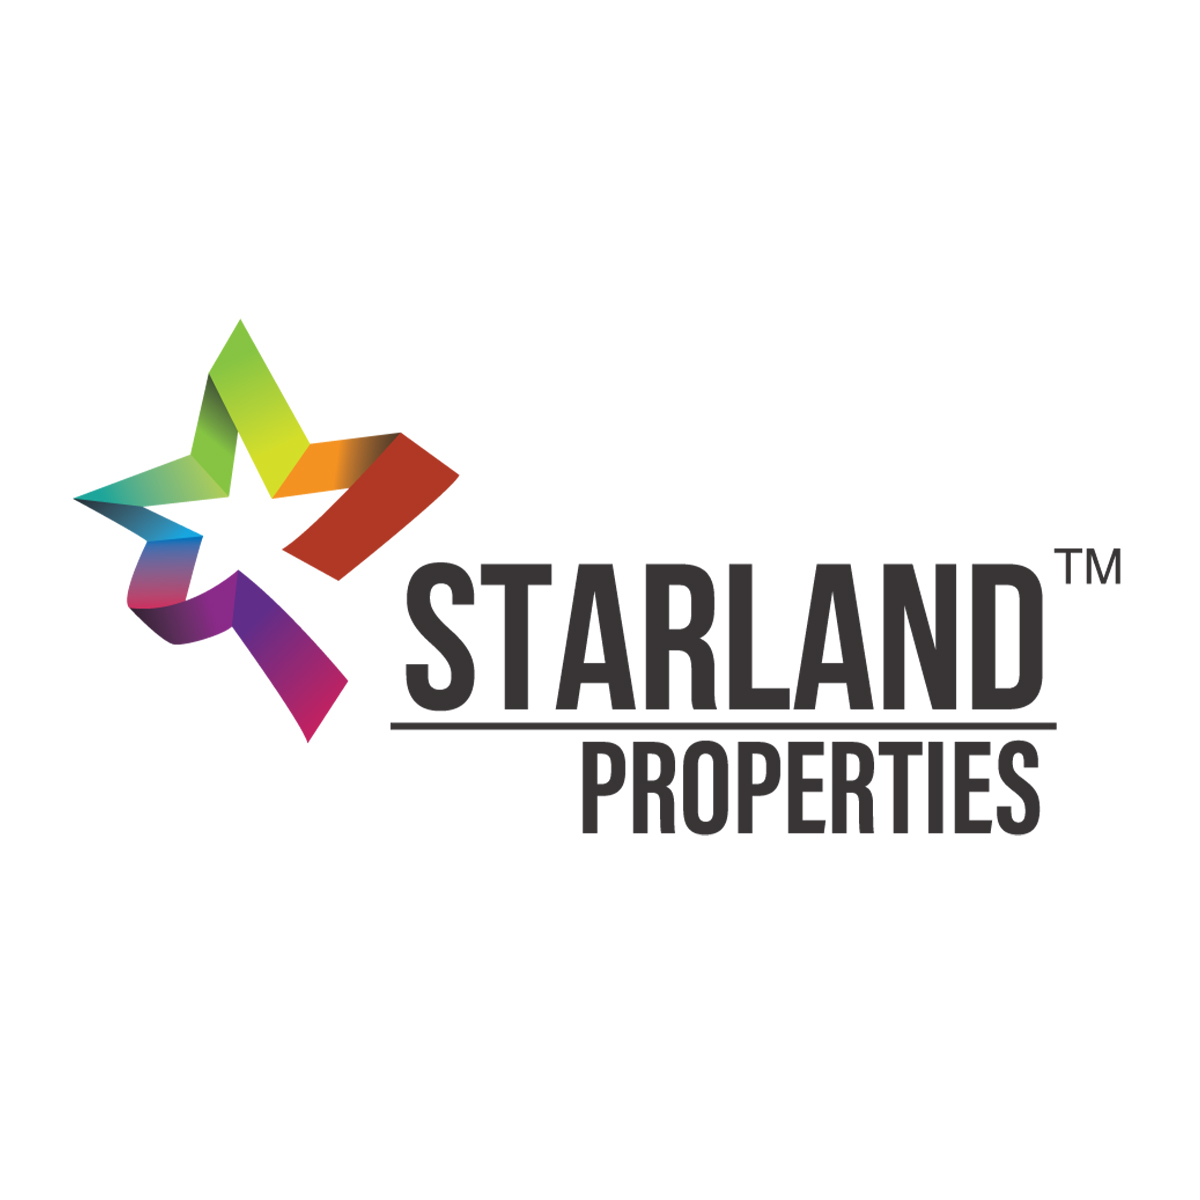 starland it solution - seo, digital marketing company in ahmedabad, india | business in ahmedabad, gujarat